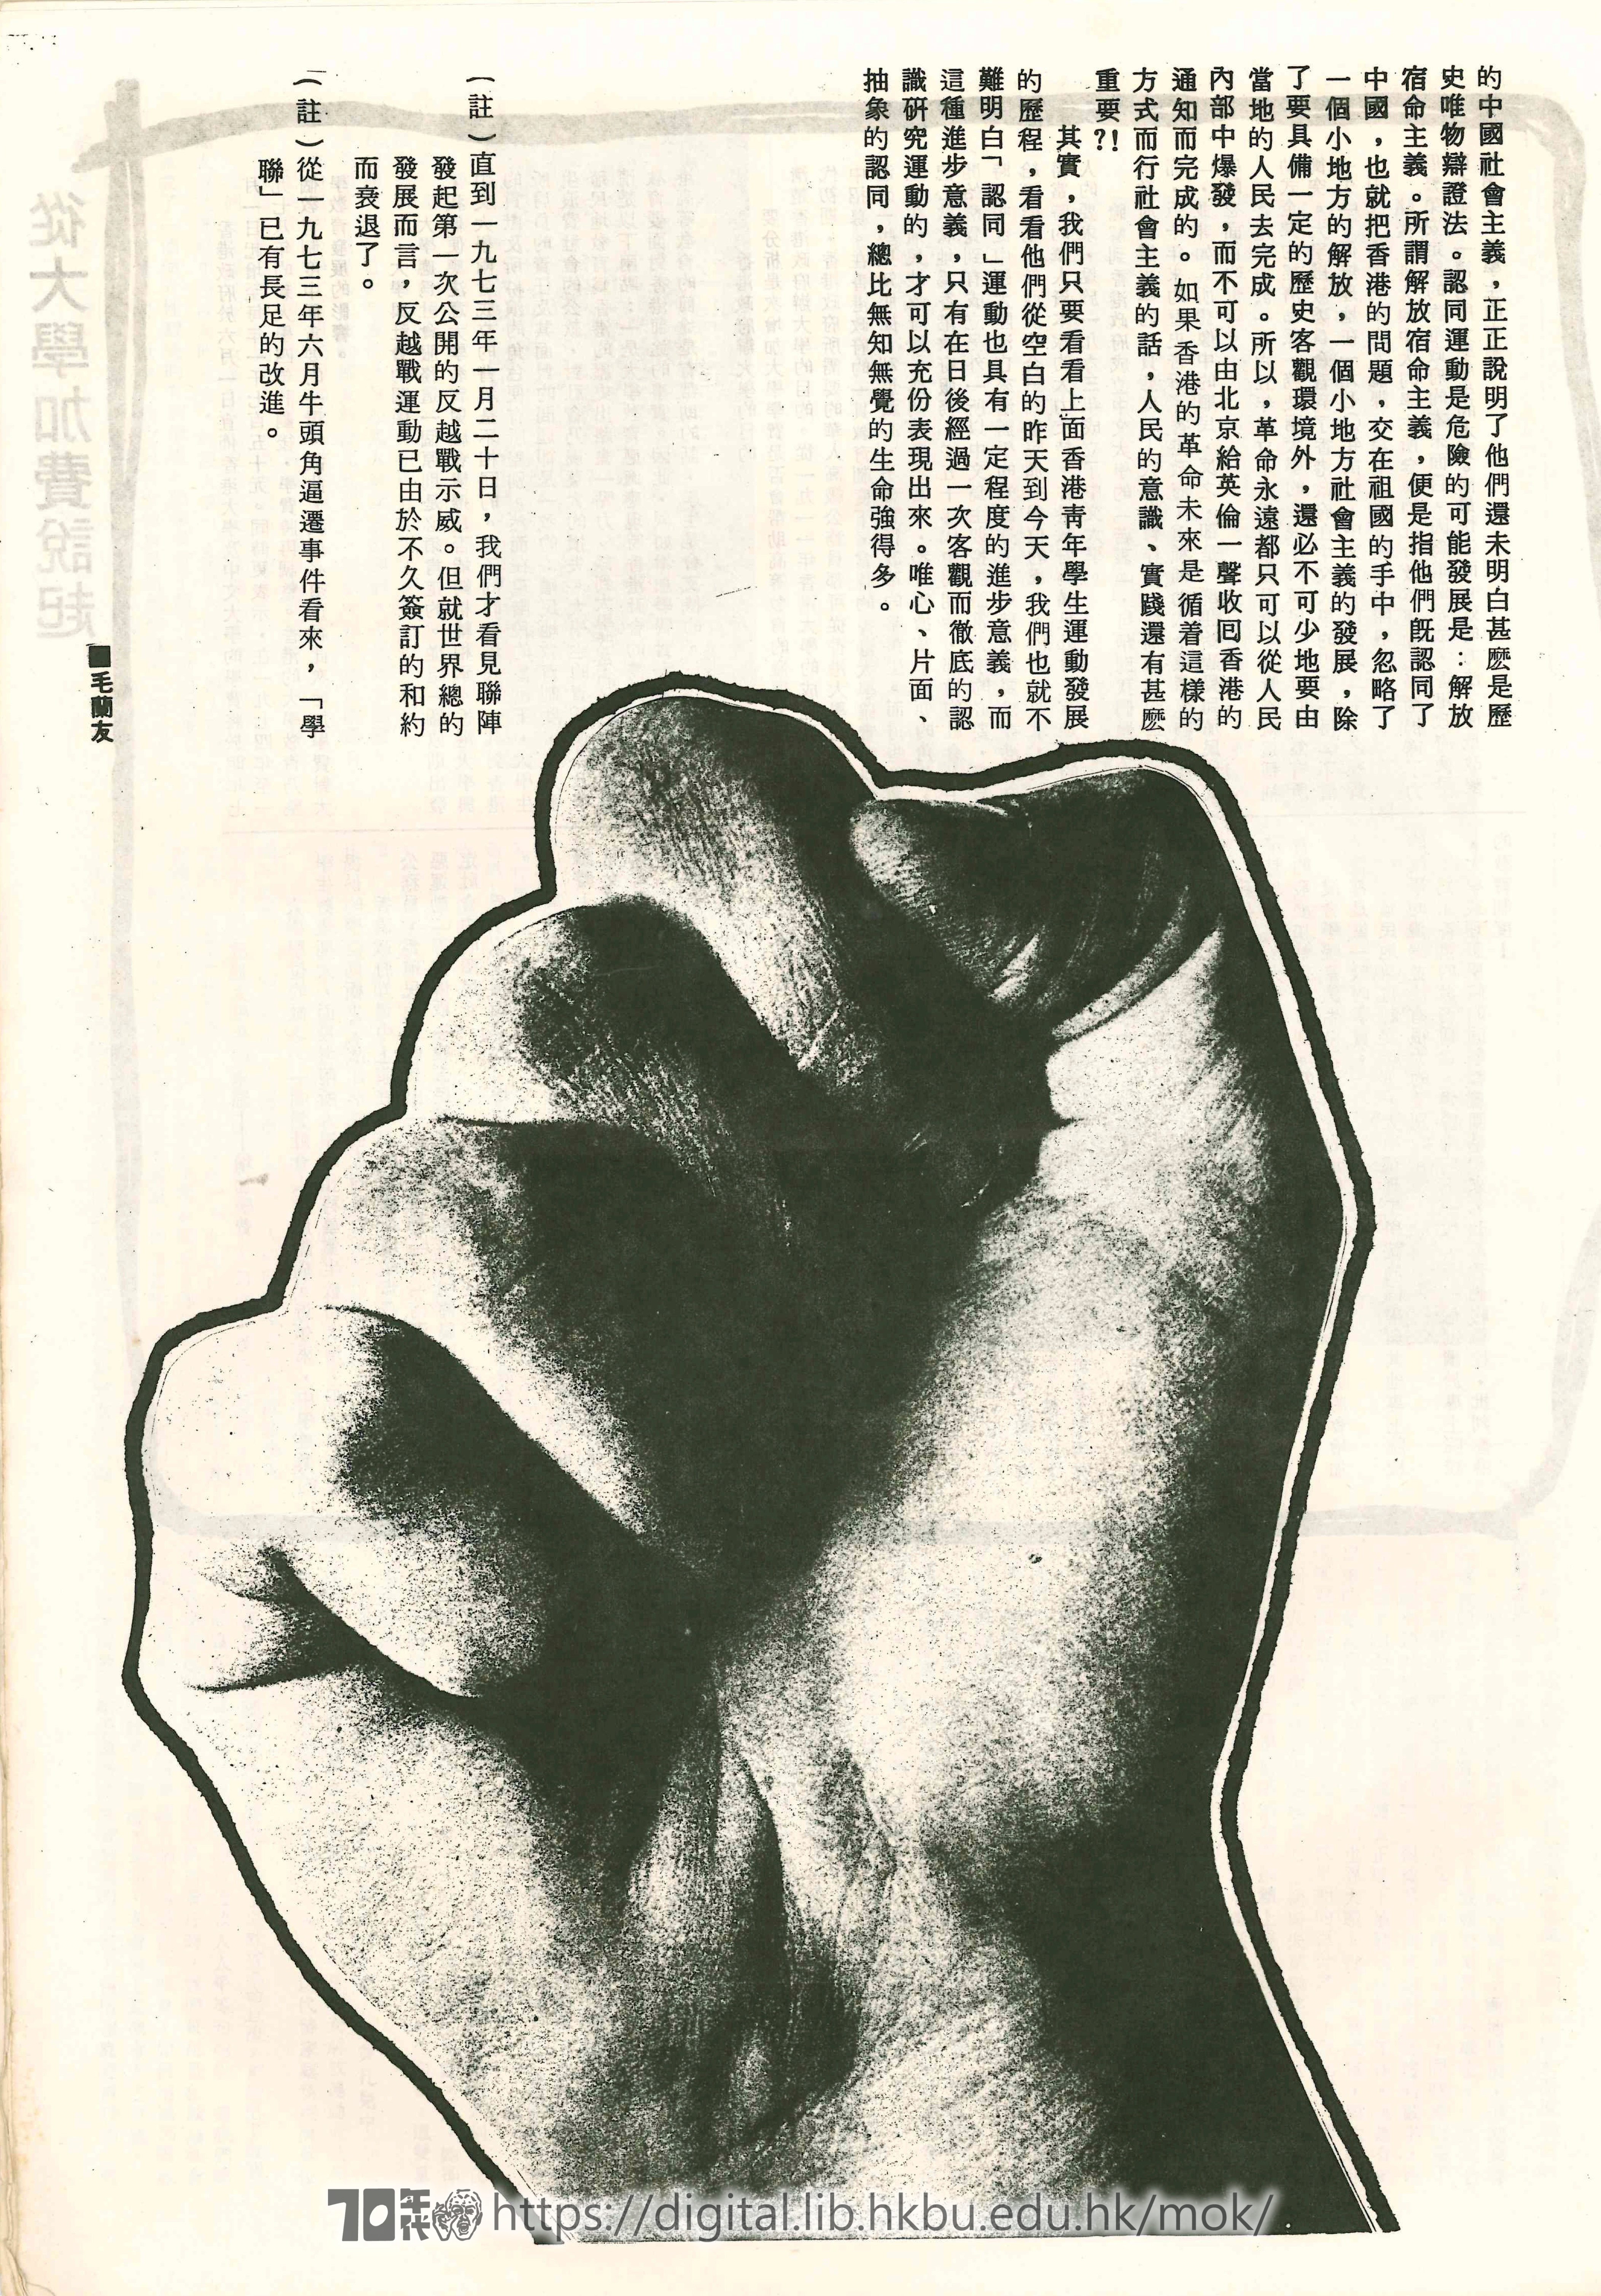  29 Comprehensive review on Hong Kong student movement 毛蘭友 